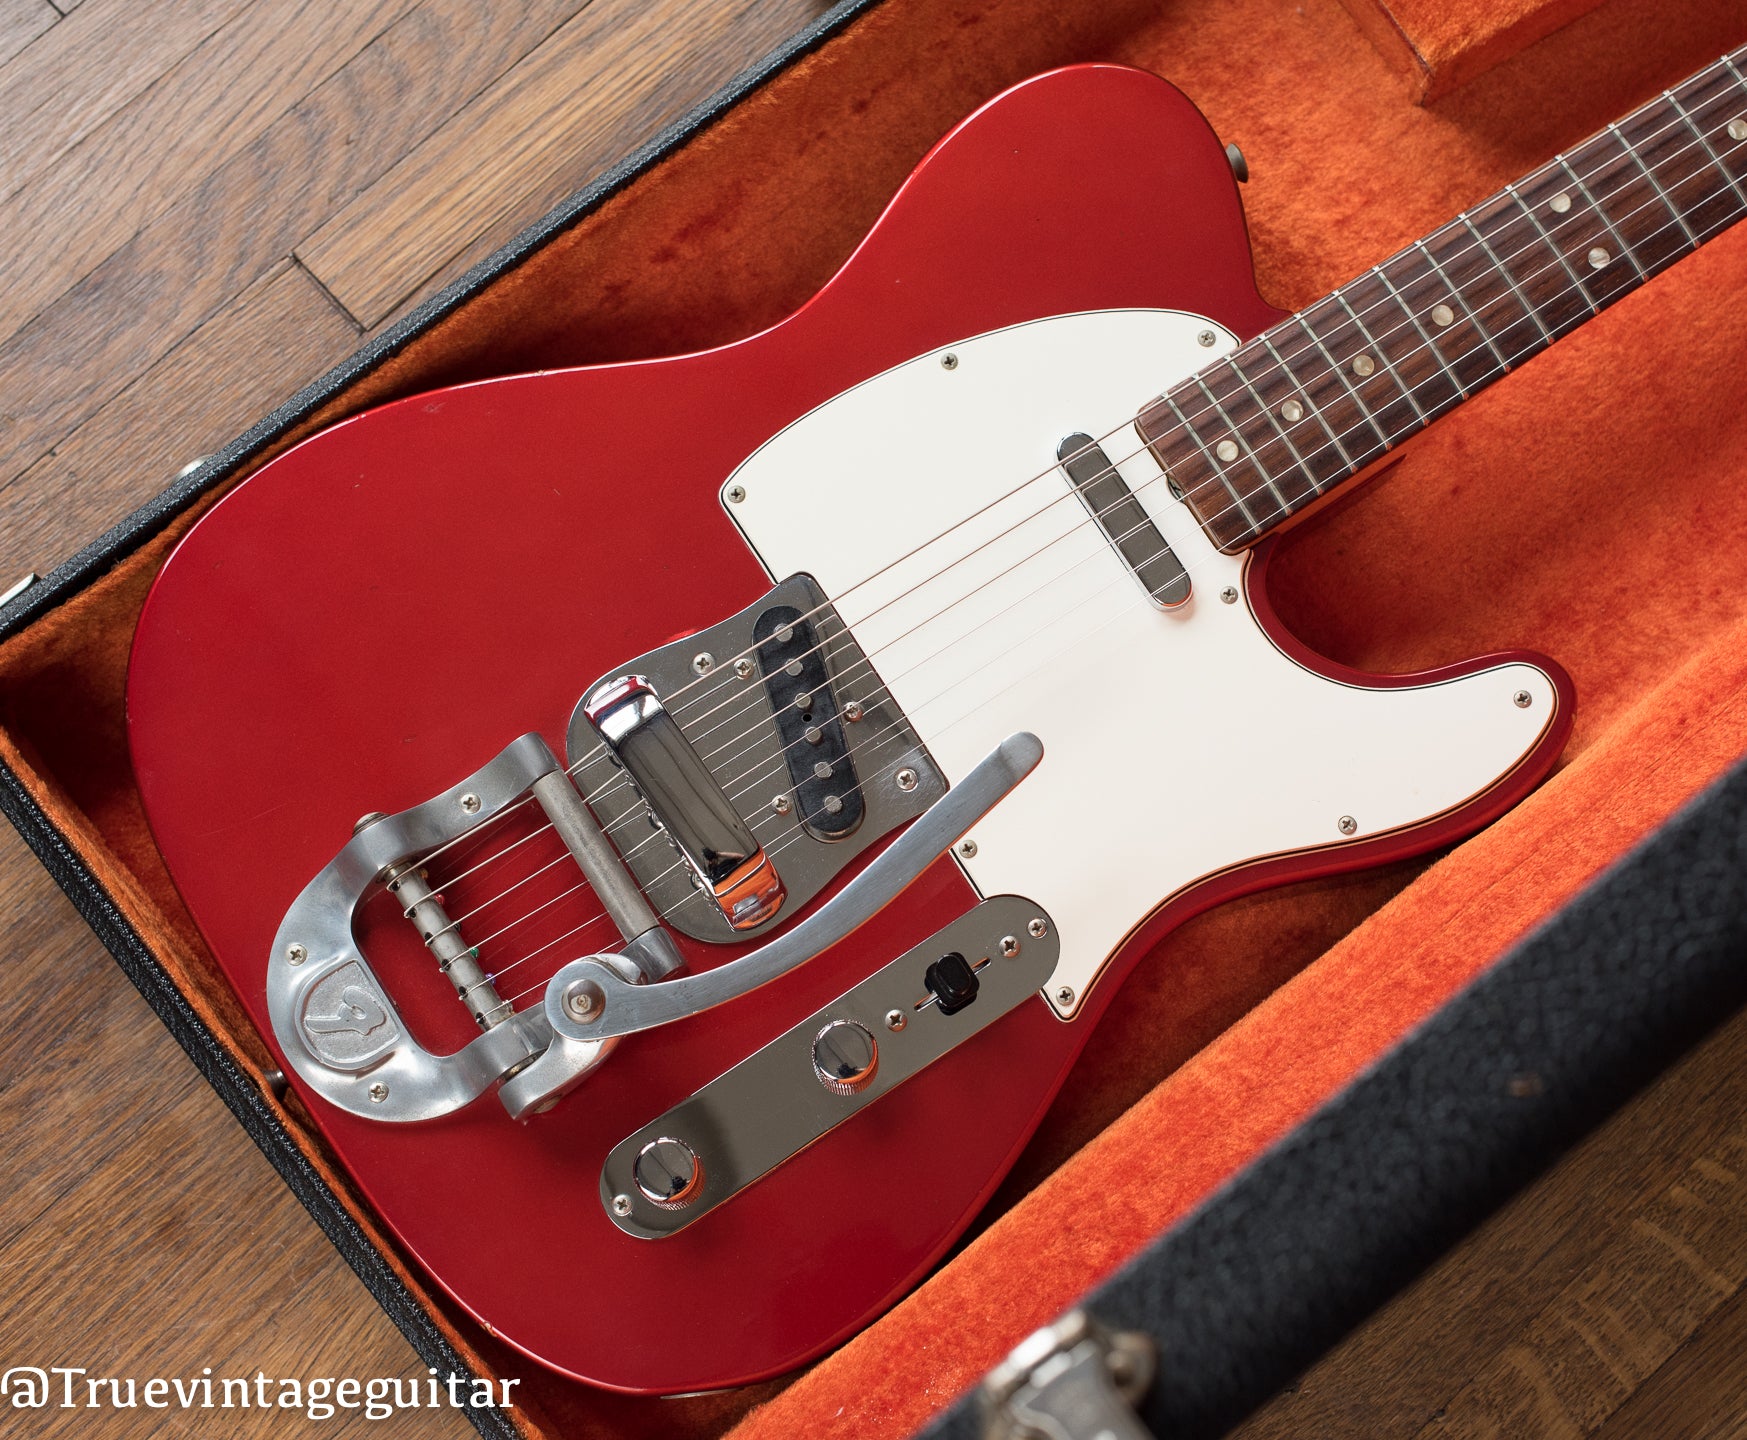 Vintage 1968 Fender Telecaster Candy Apple Red electric guitar